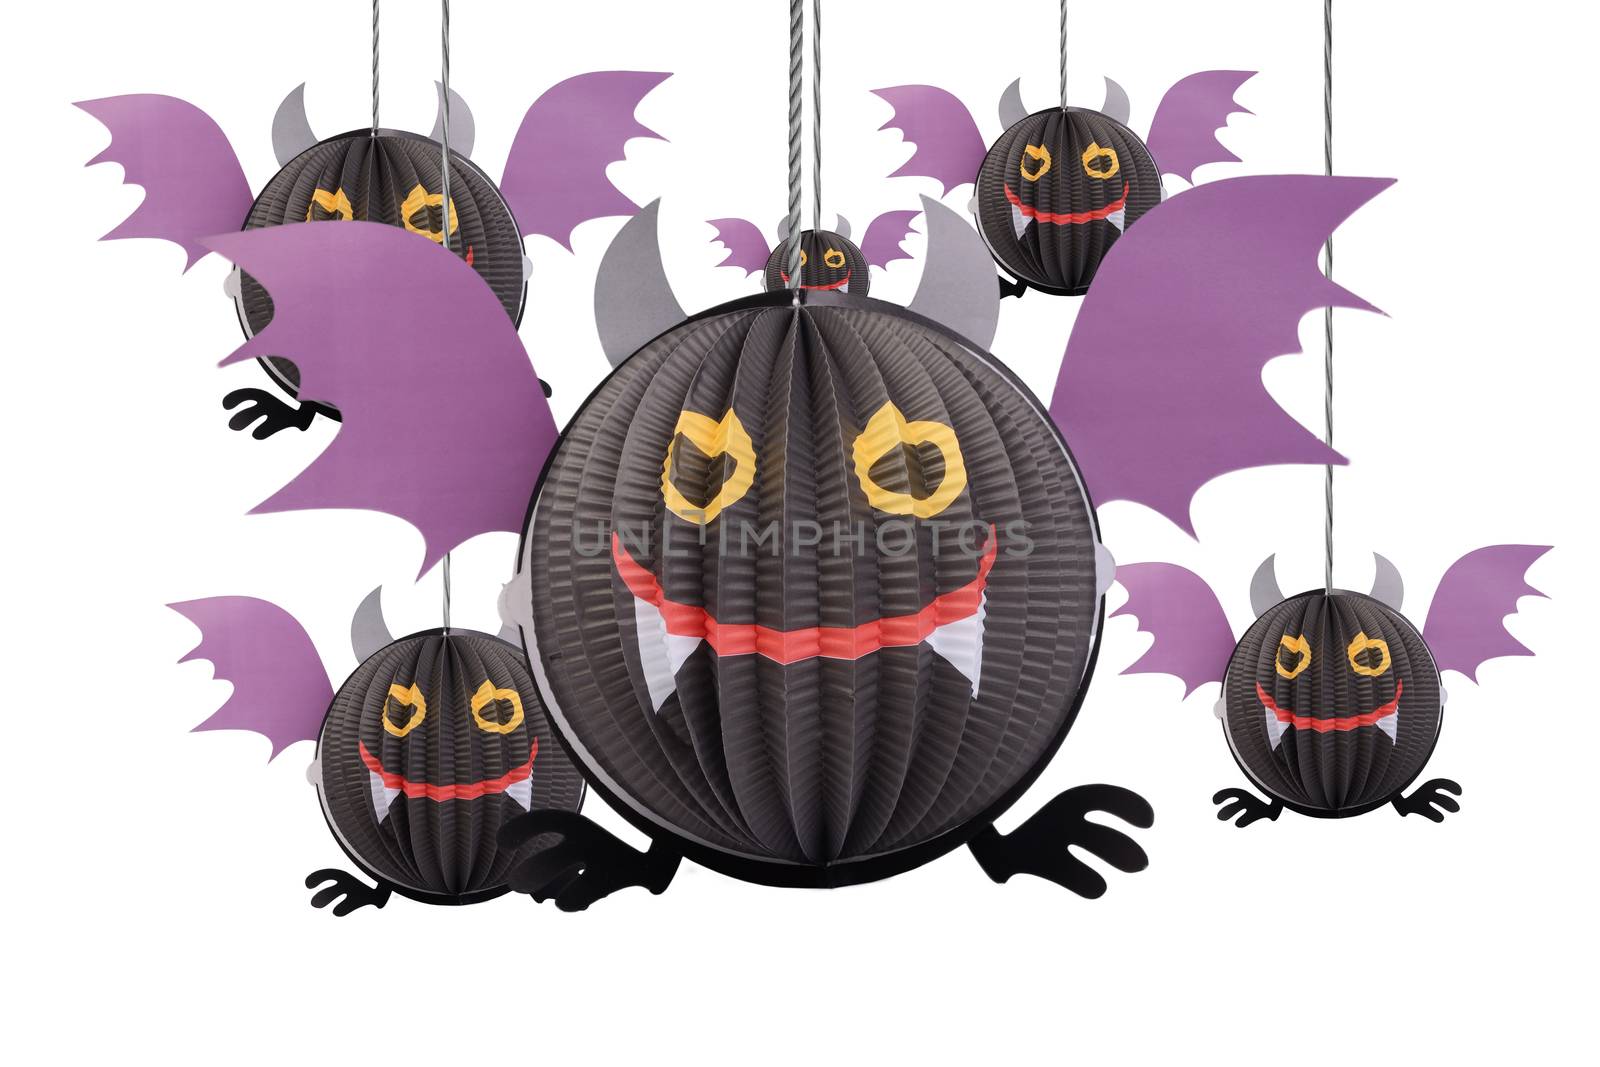 Devil bat hanging mobile for halloween decoration on white background.